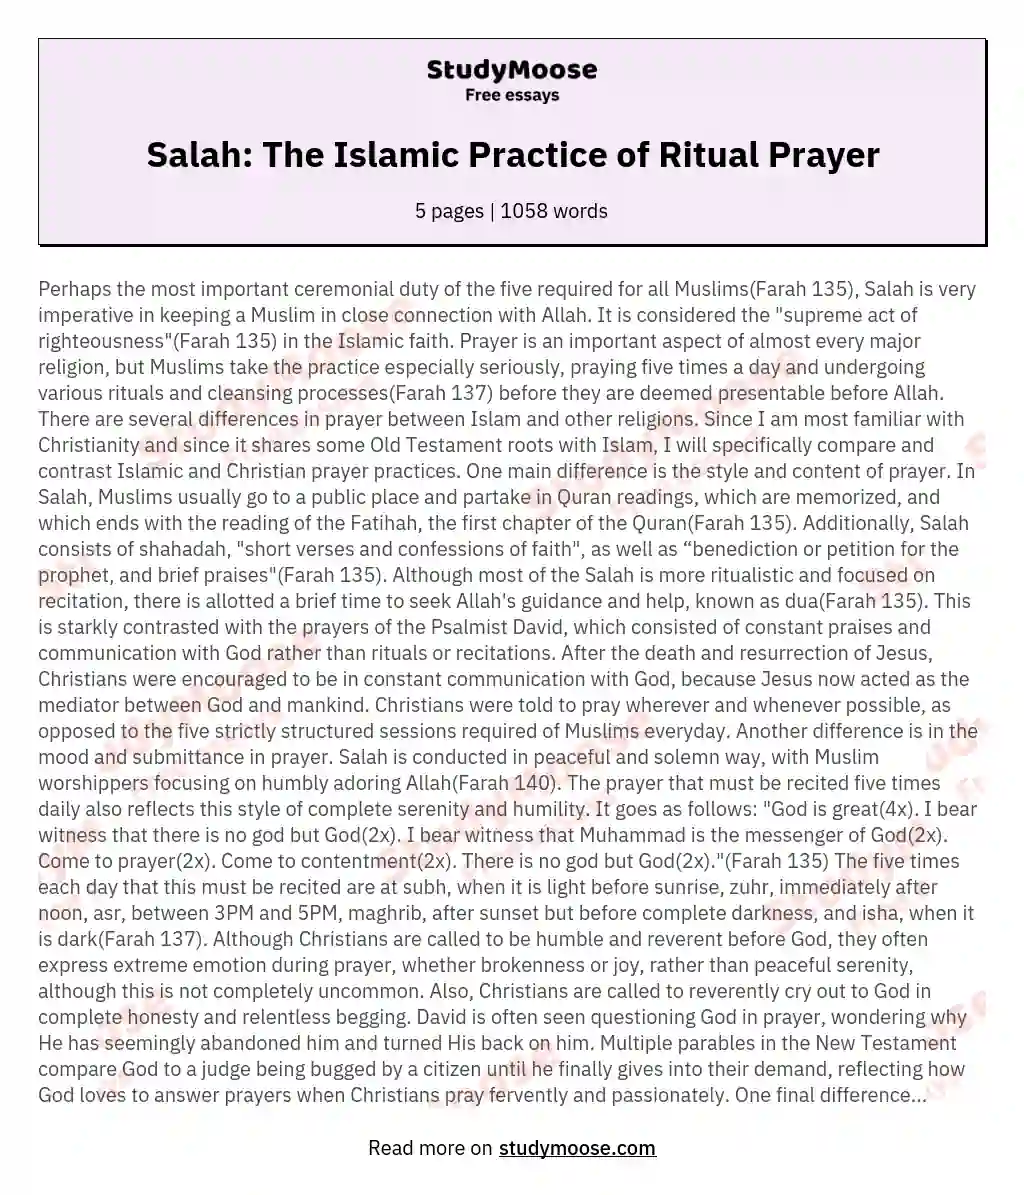 Salah: The Islamic Practice of Ritual Prayer essay